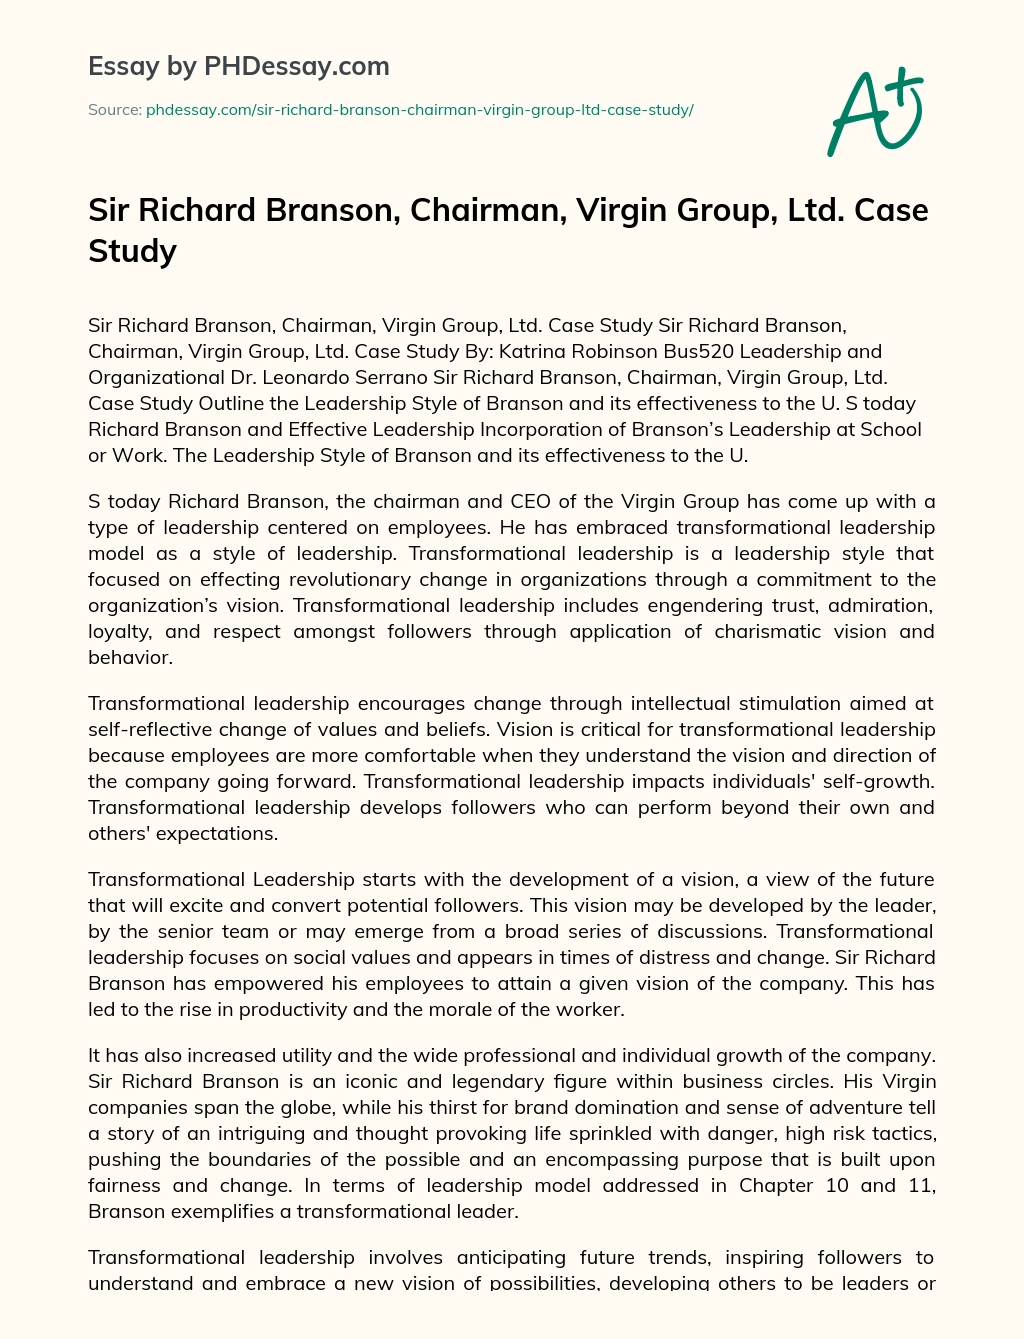 Sir Richard Branson, Chairman, Virgin Group, Ltd. Case Study essay